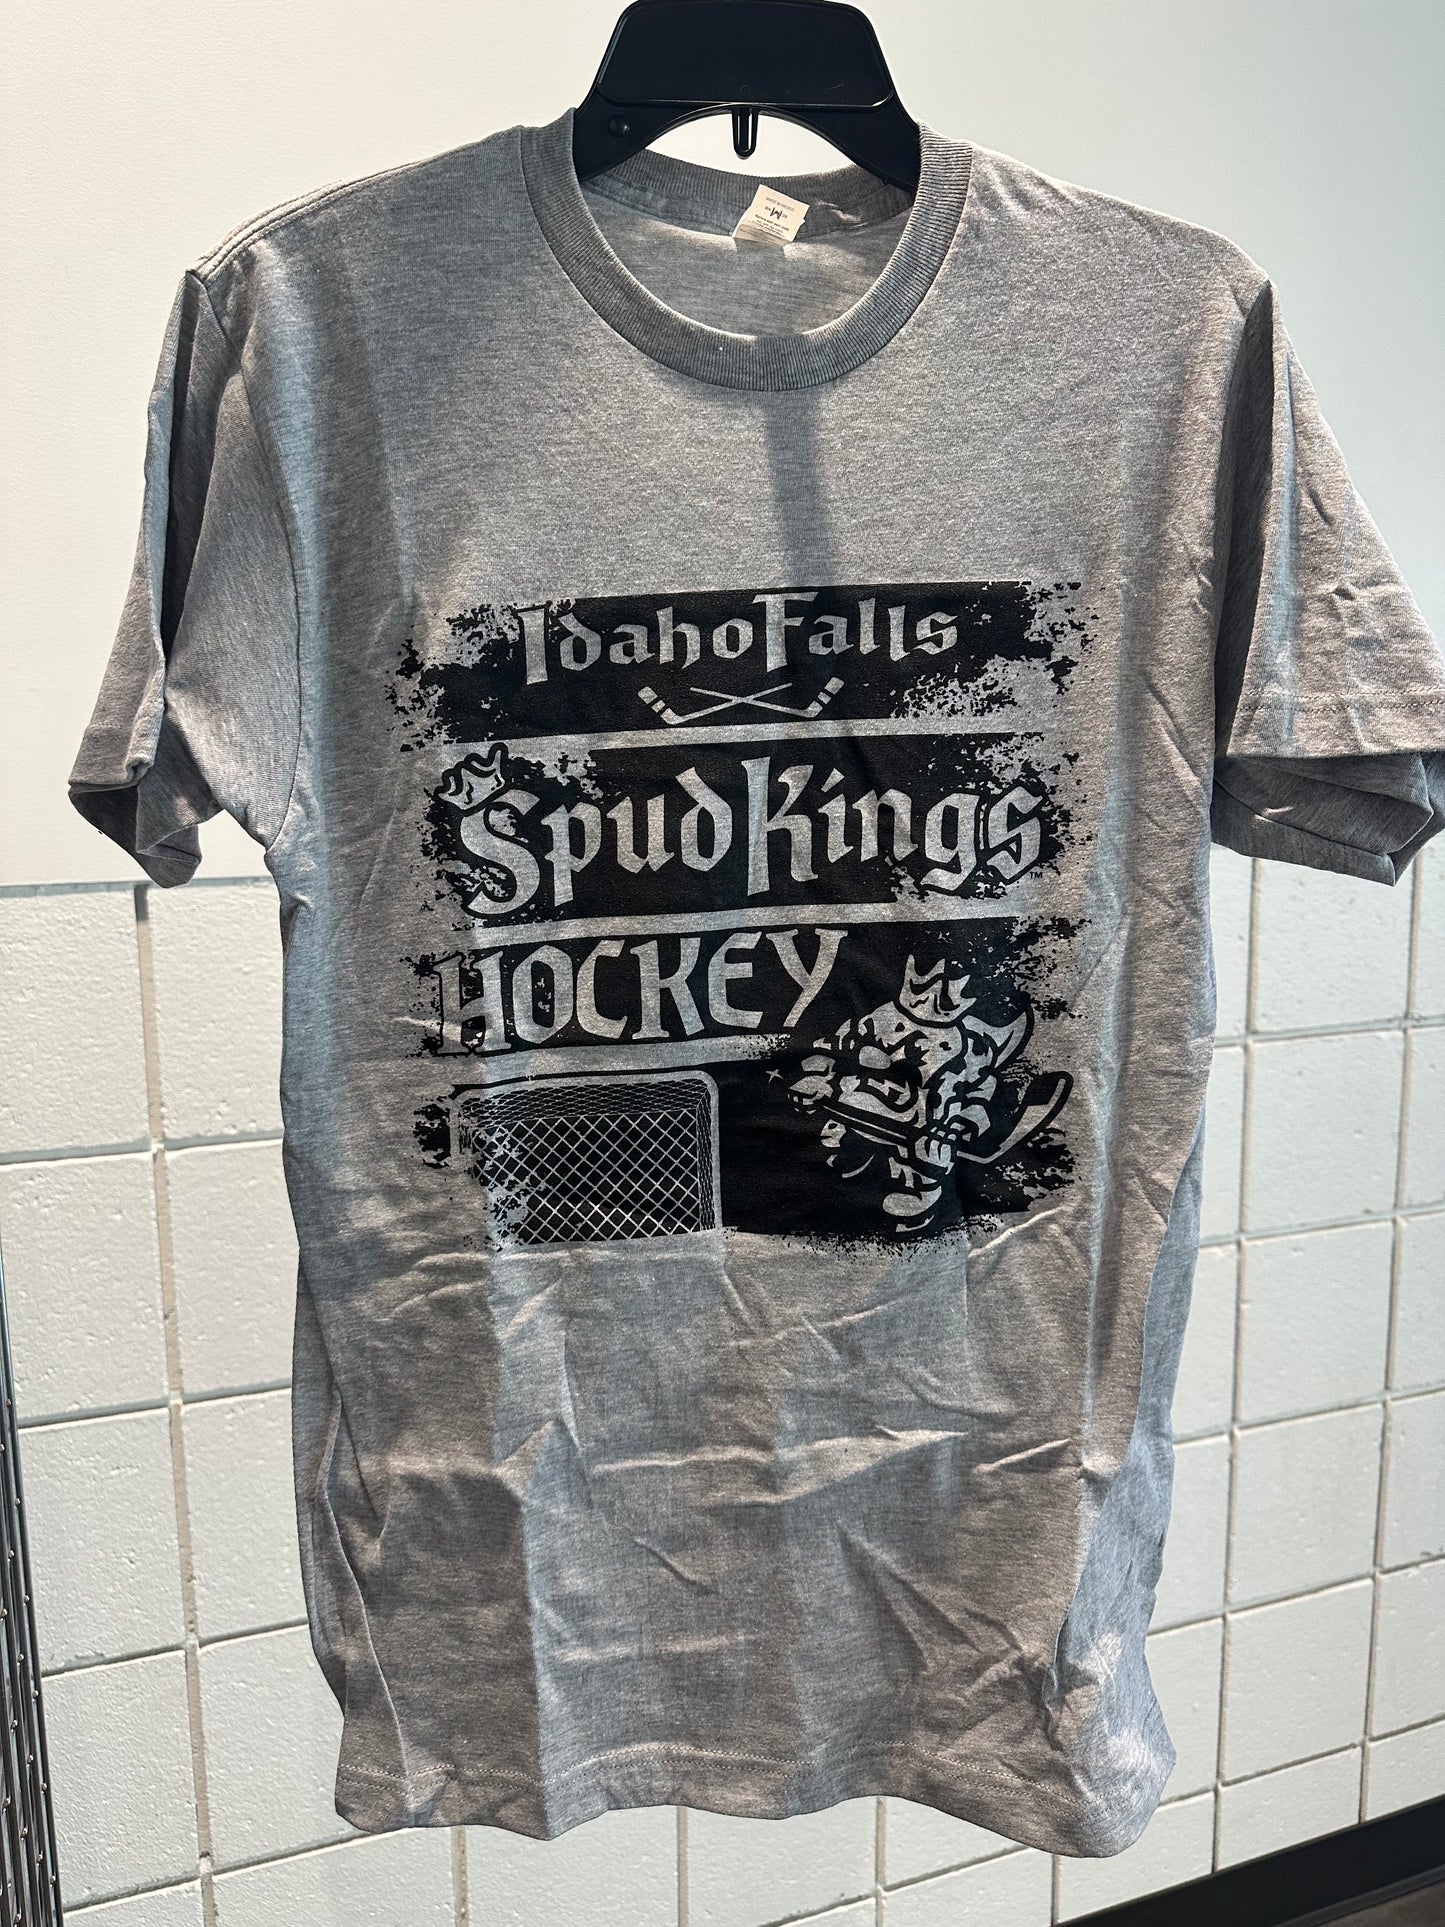 Idaho Falls Spud Kings Hockey Short Sleeve